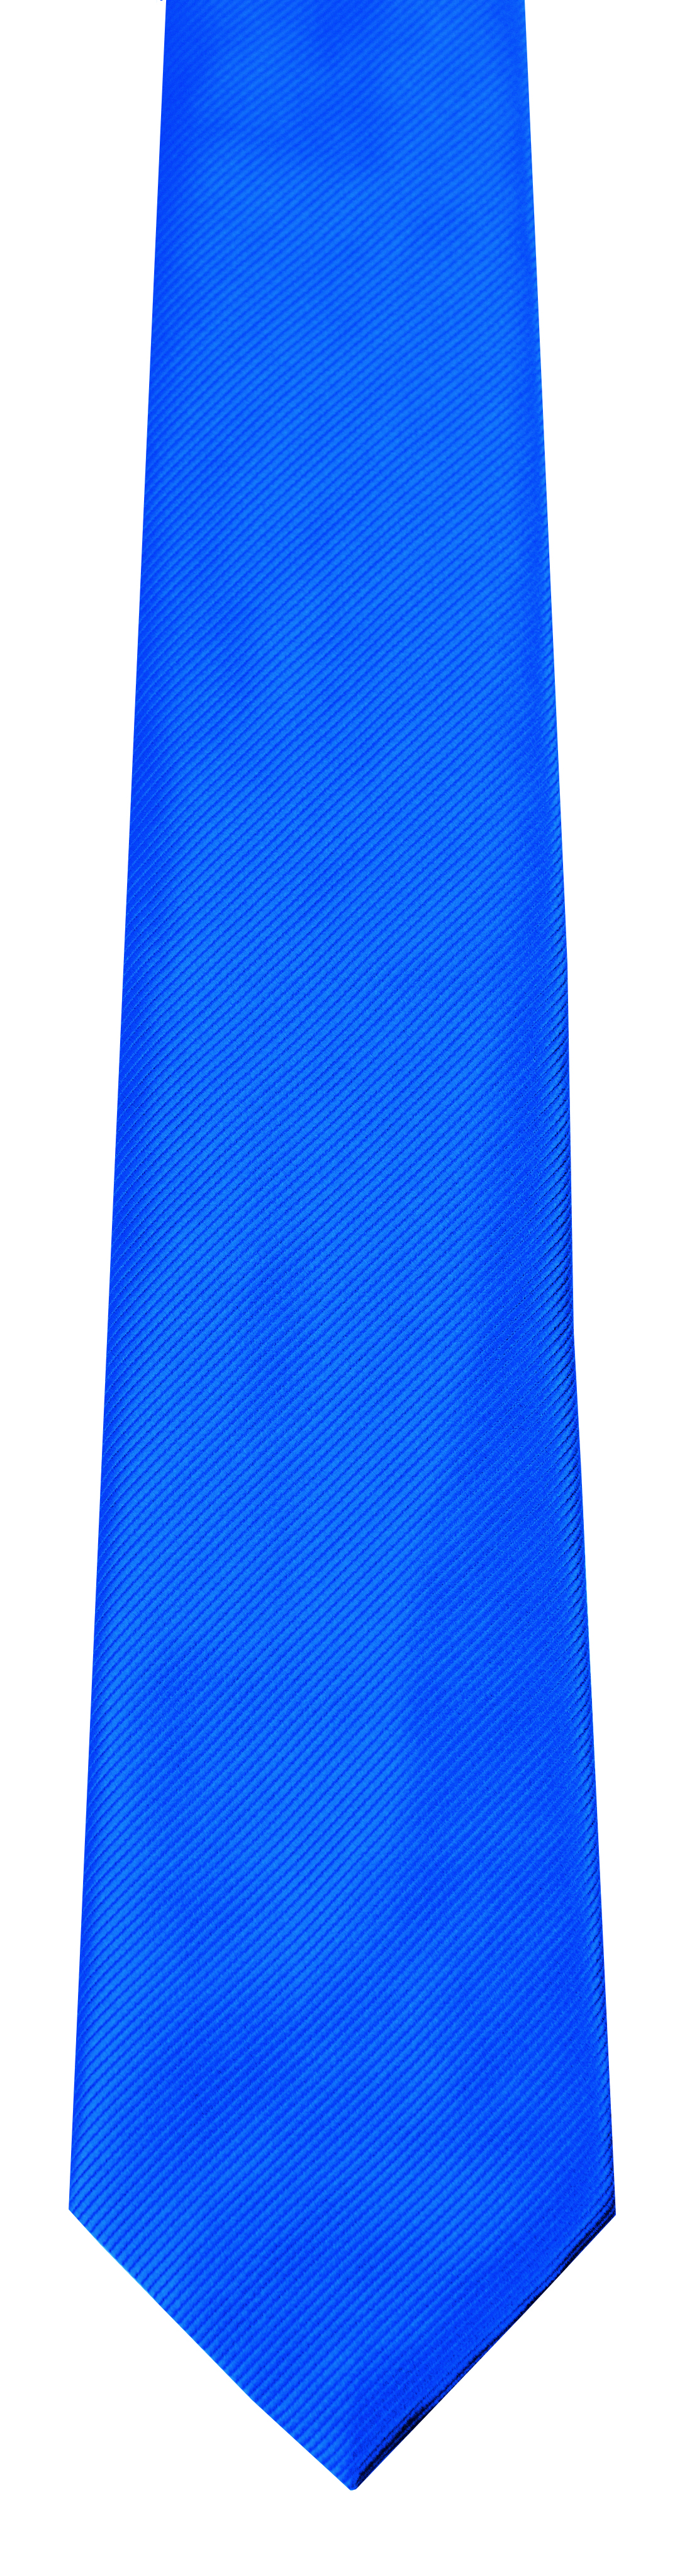 Royal Blue Metallic Tie